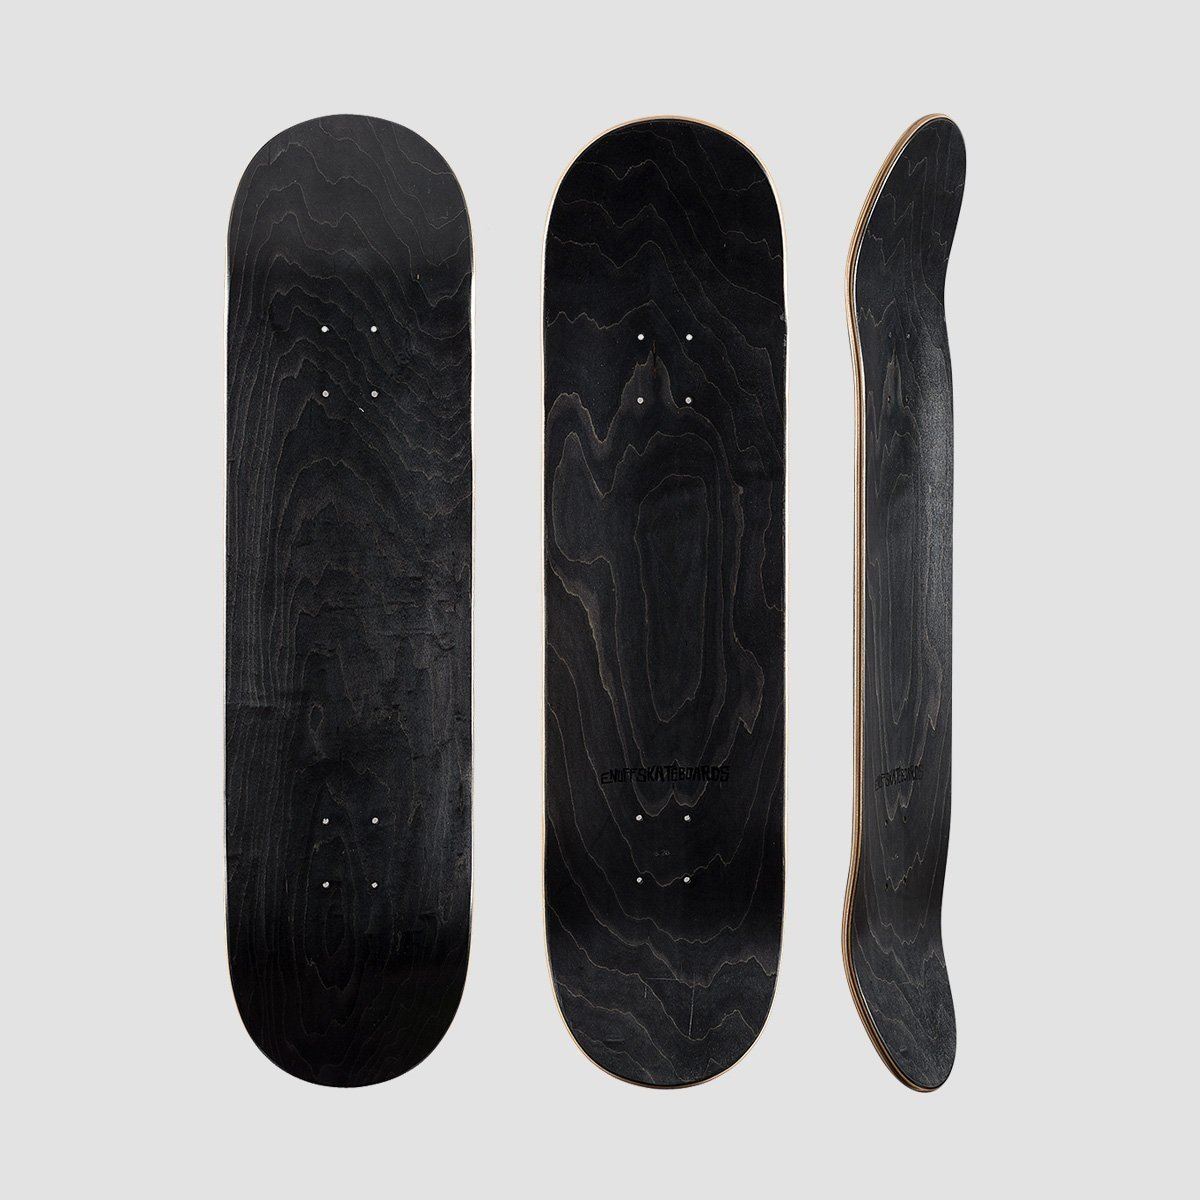 Enuff Classic Skateboard Deck Black - 8.25"